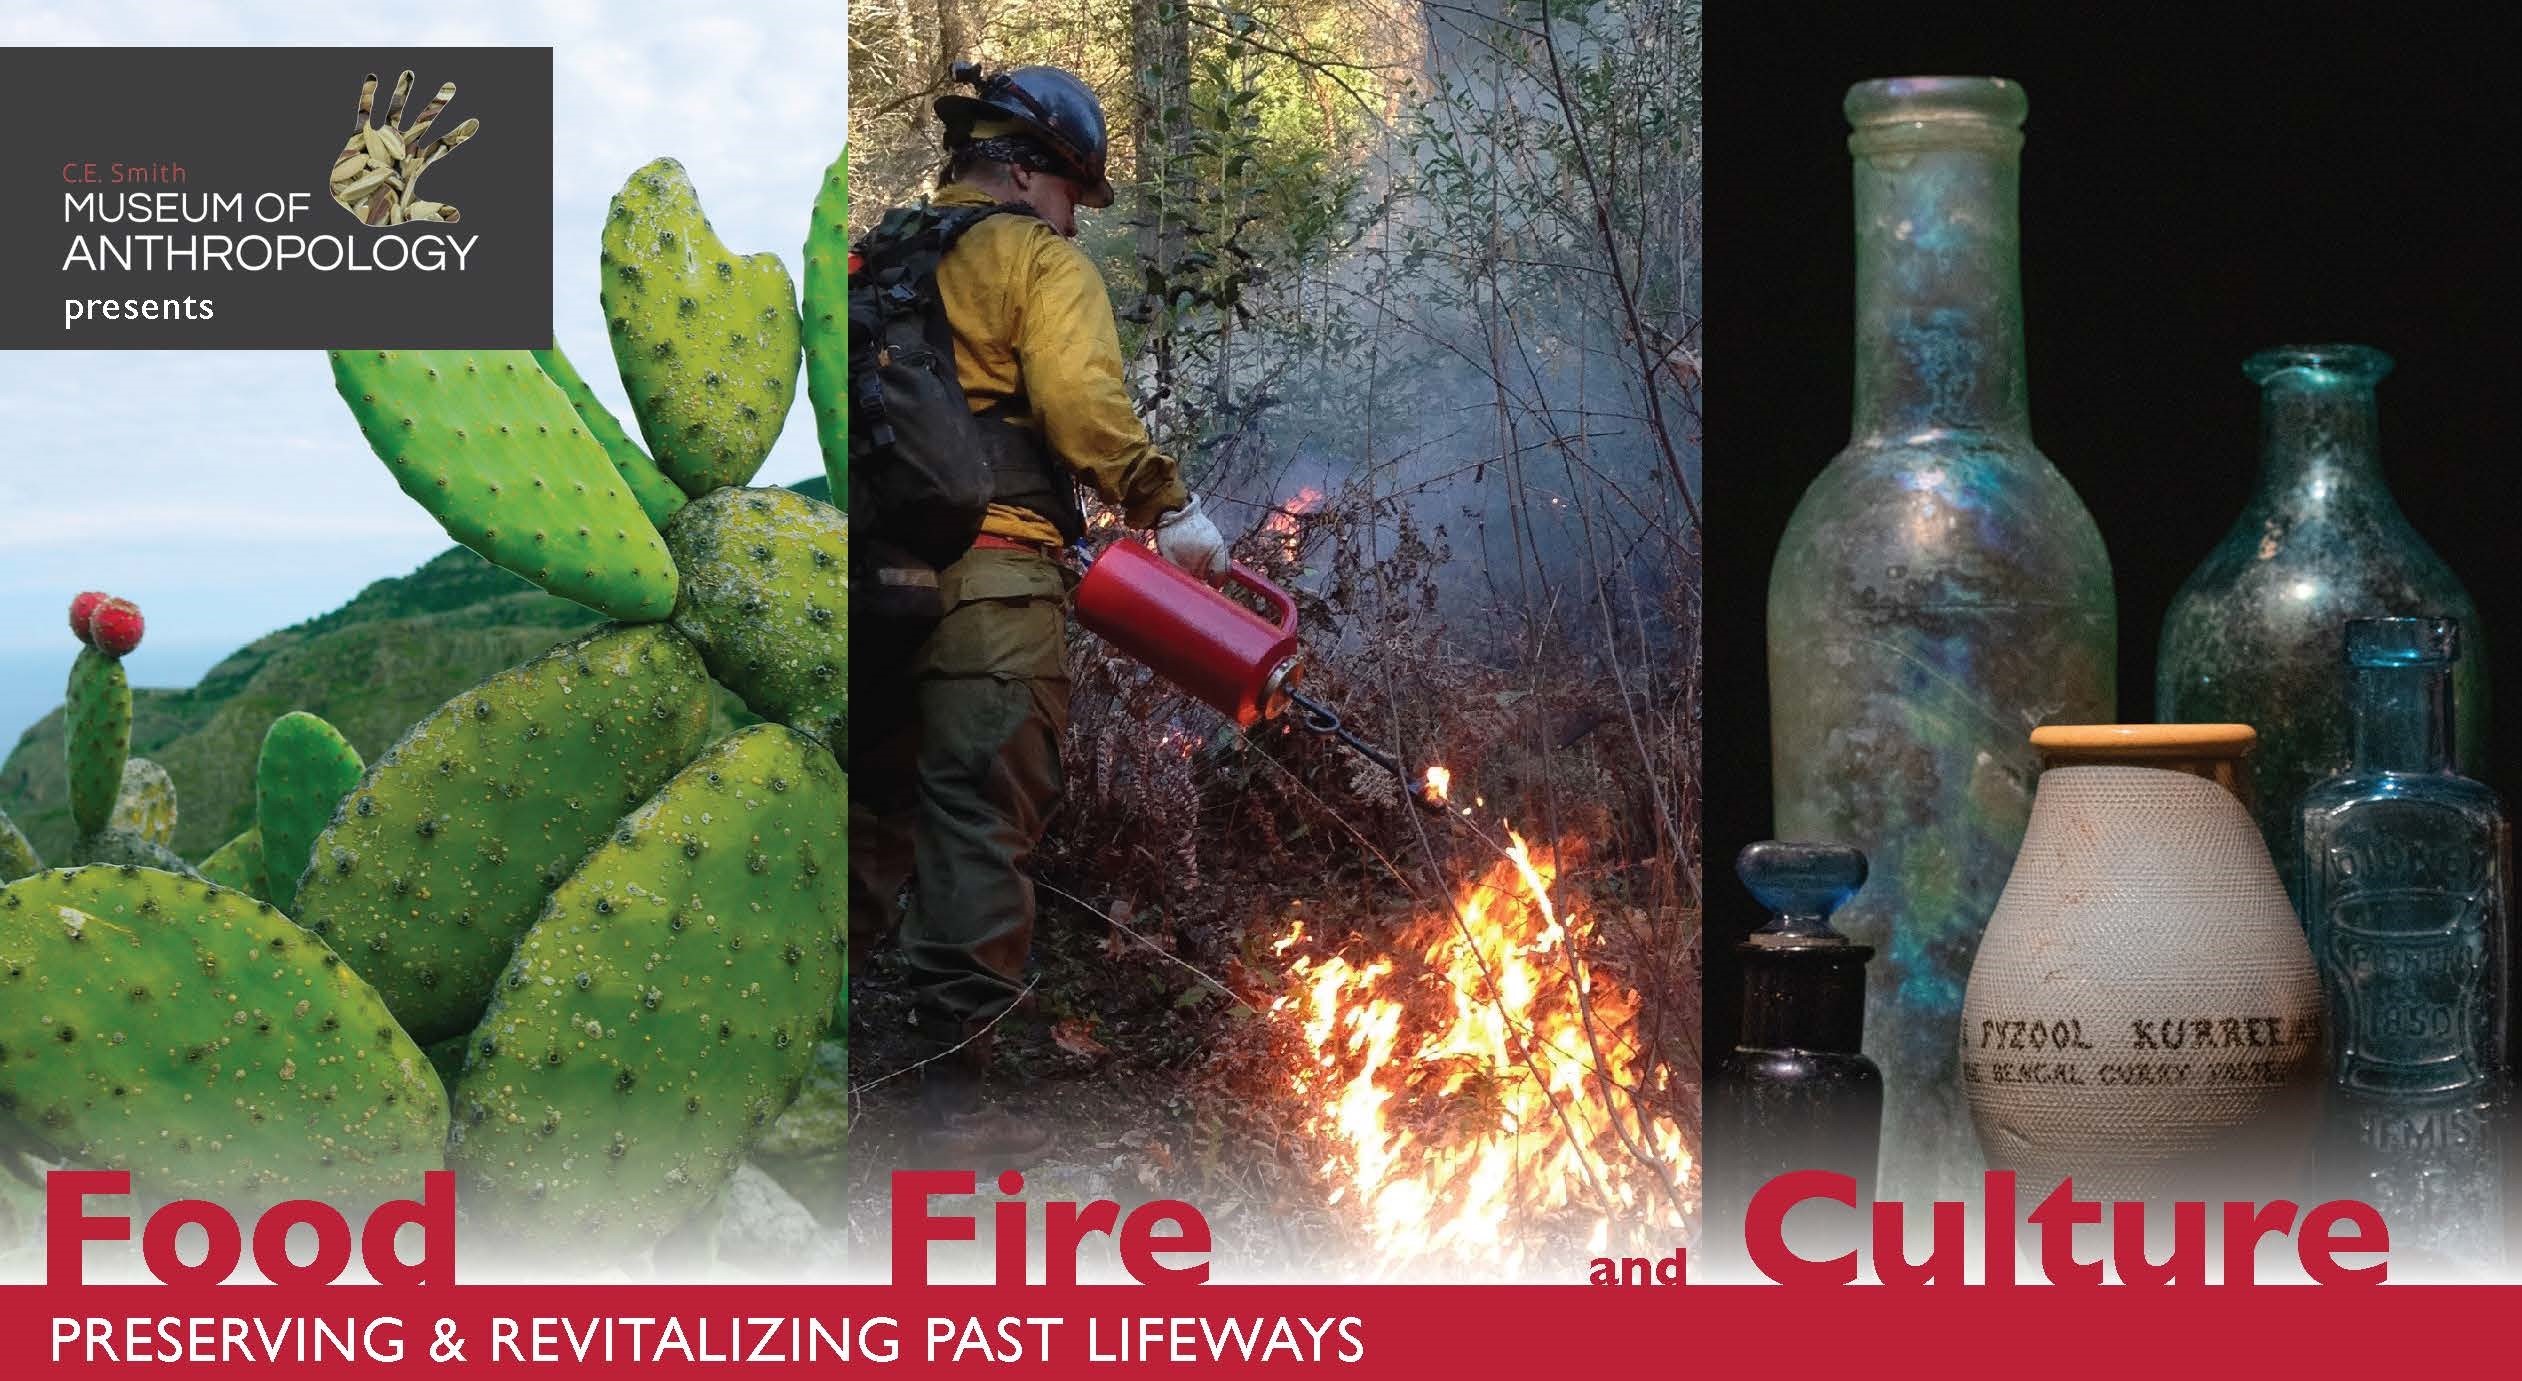 cactus, burning and bottles - panel ad